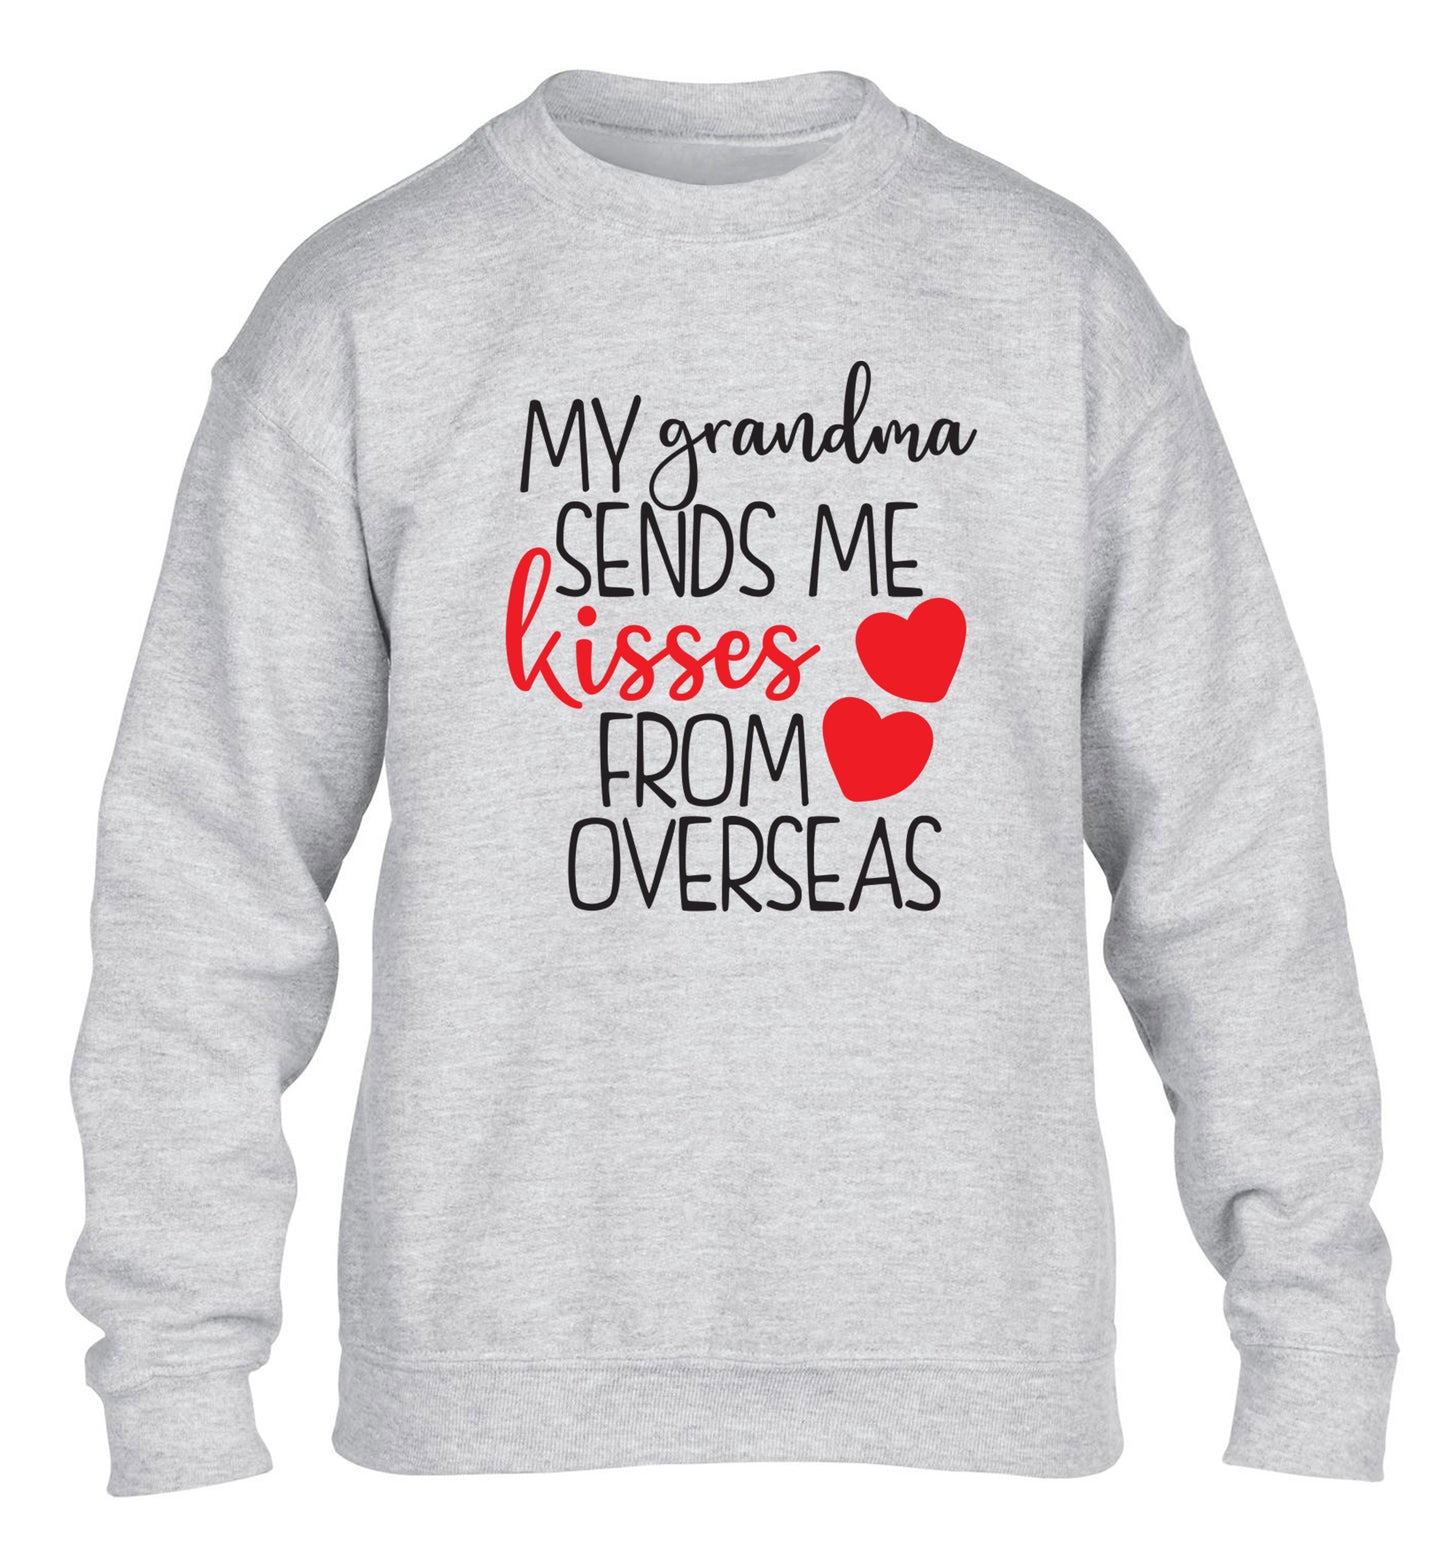 My Grandma sends me kisses from overseas children's grey sweater 12-13 Years